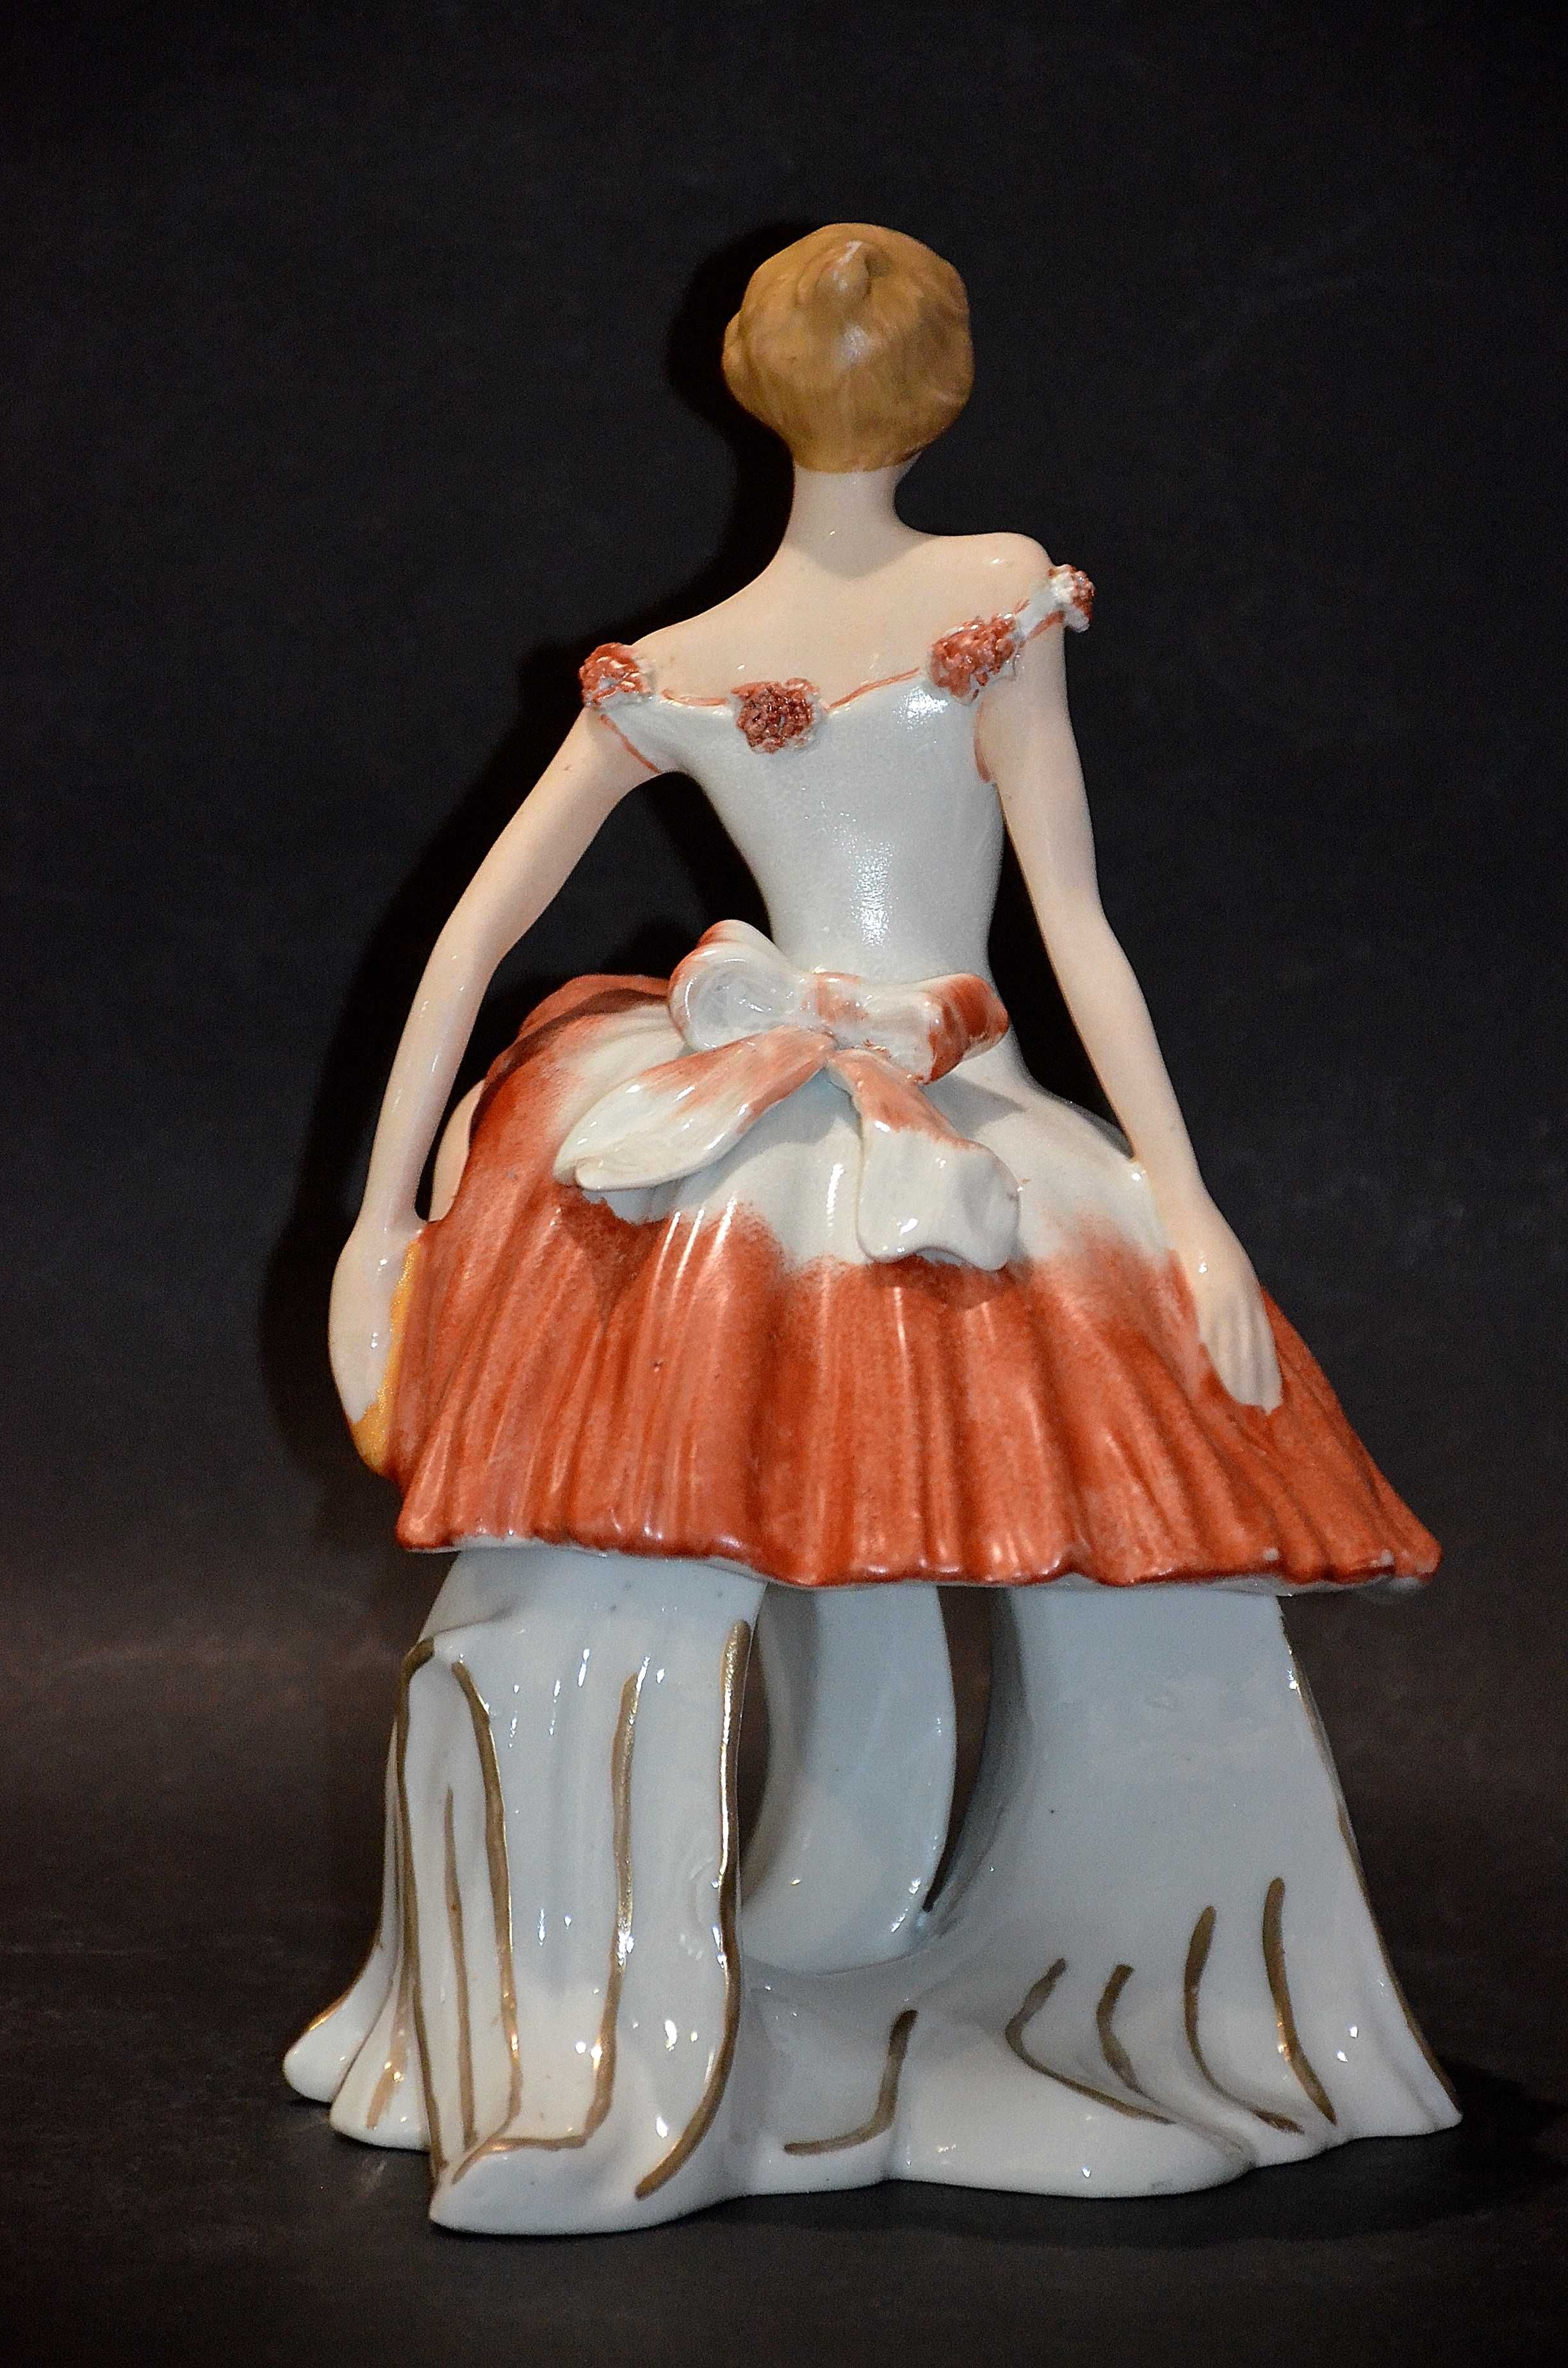 Roceram porcelana figurka Olga do kolekcji, ok. 25 cm.